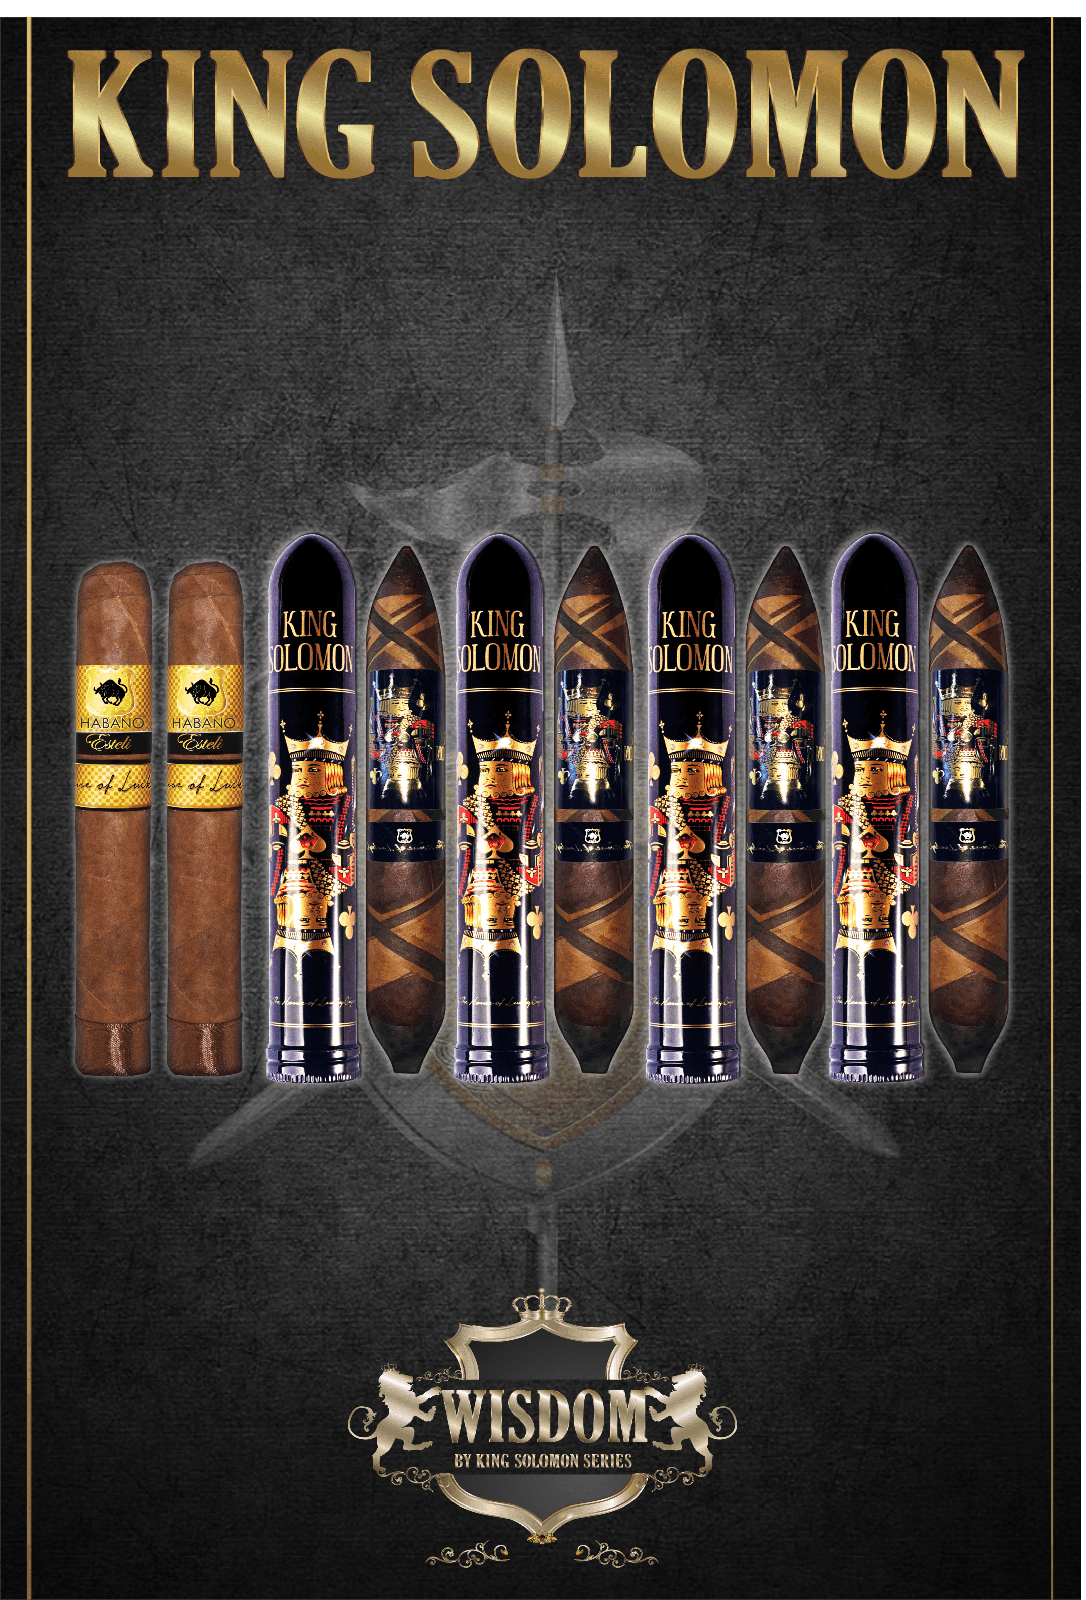 From The King Solomon Series: 4 Set Solomon 7x60 and 2 Habano Esteli Gordo 6x60 Cigars